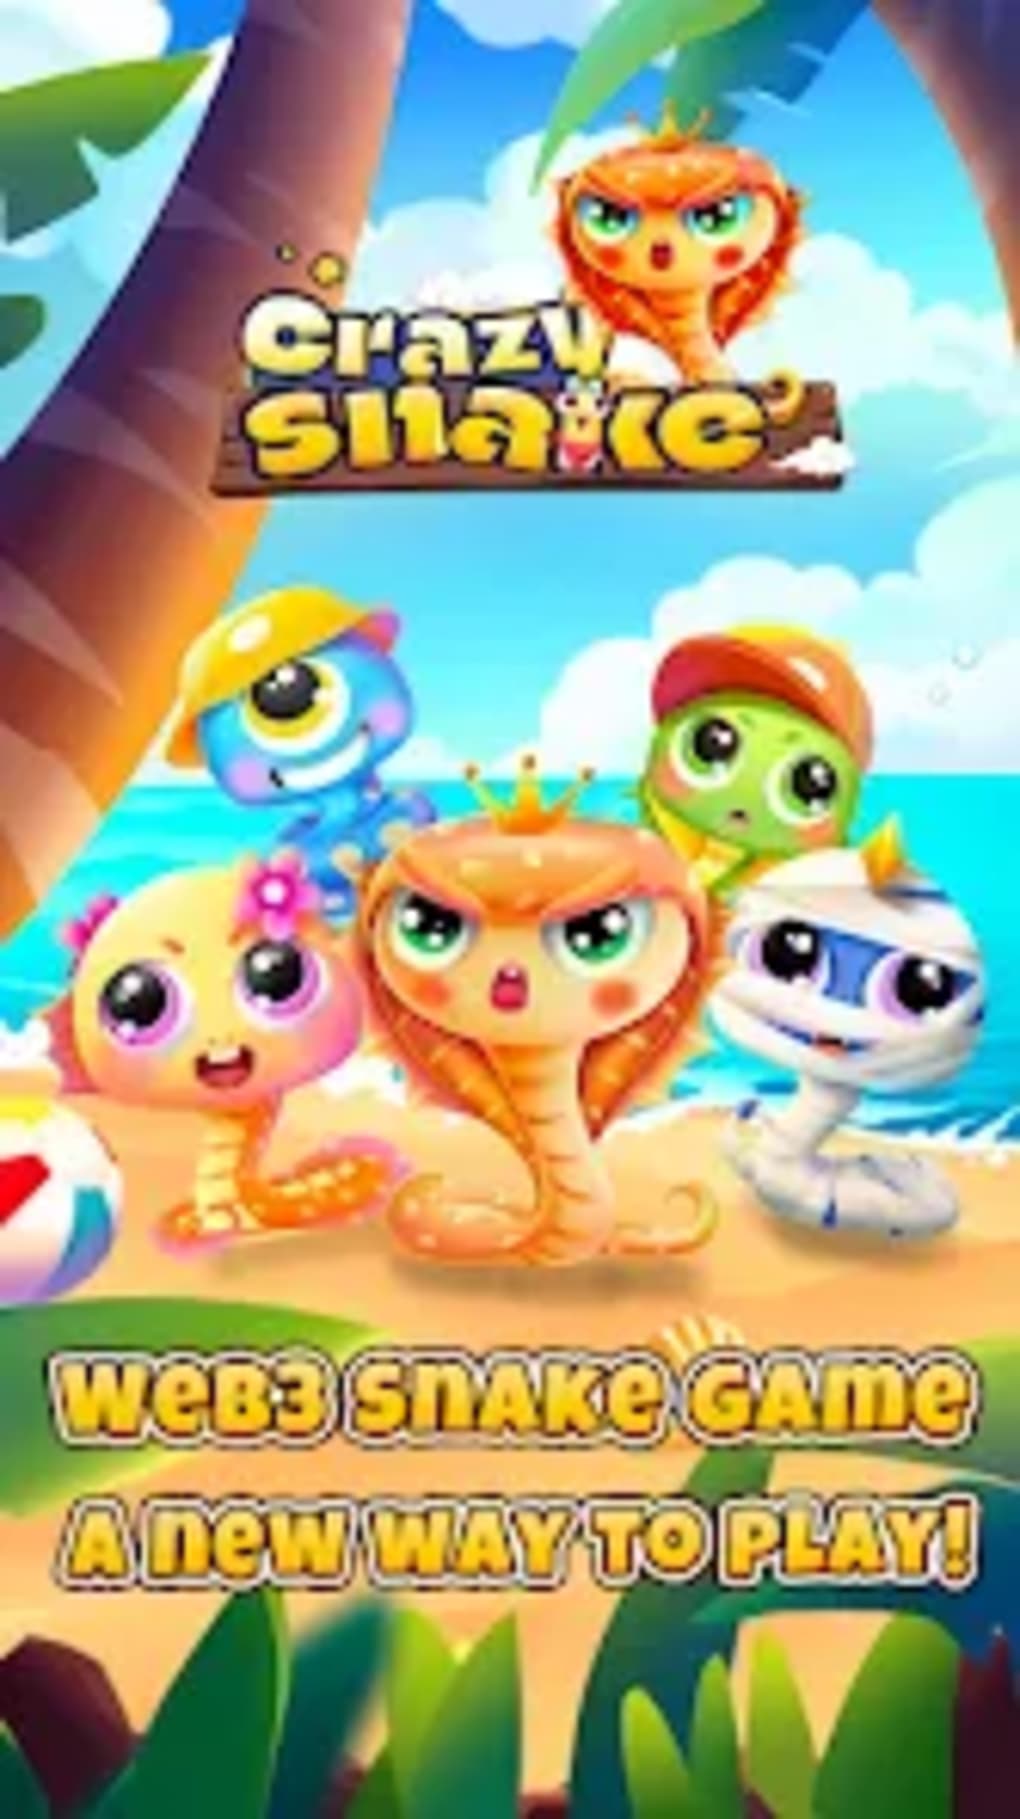 Crazy Snake - Web3 Snake Game para Android - Download